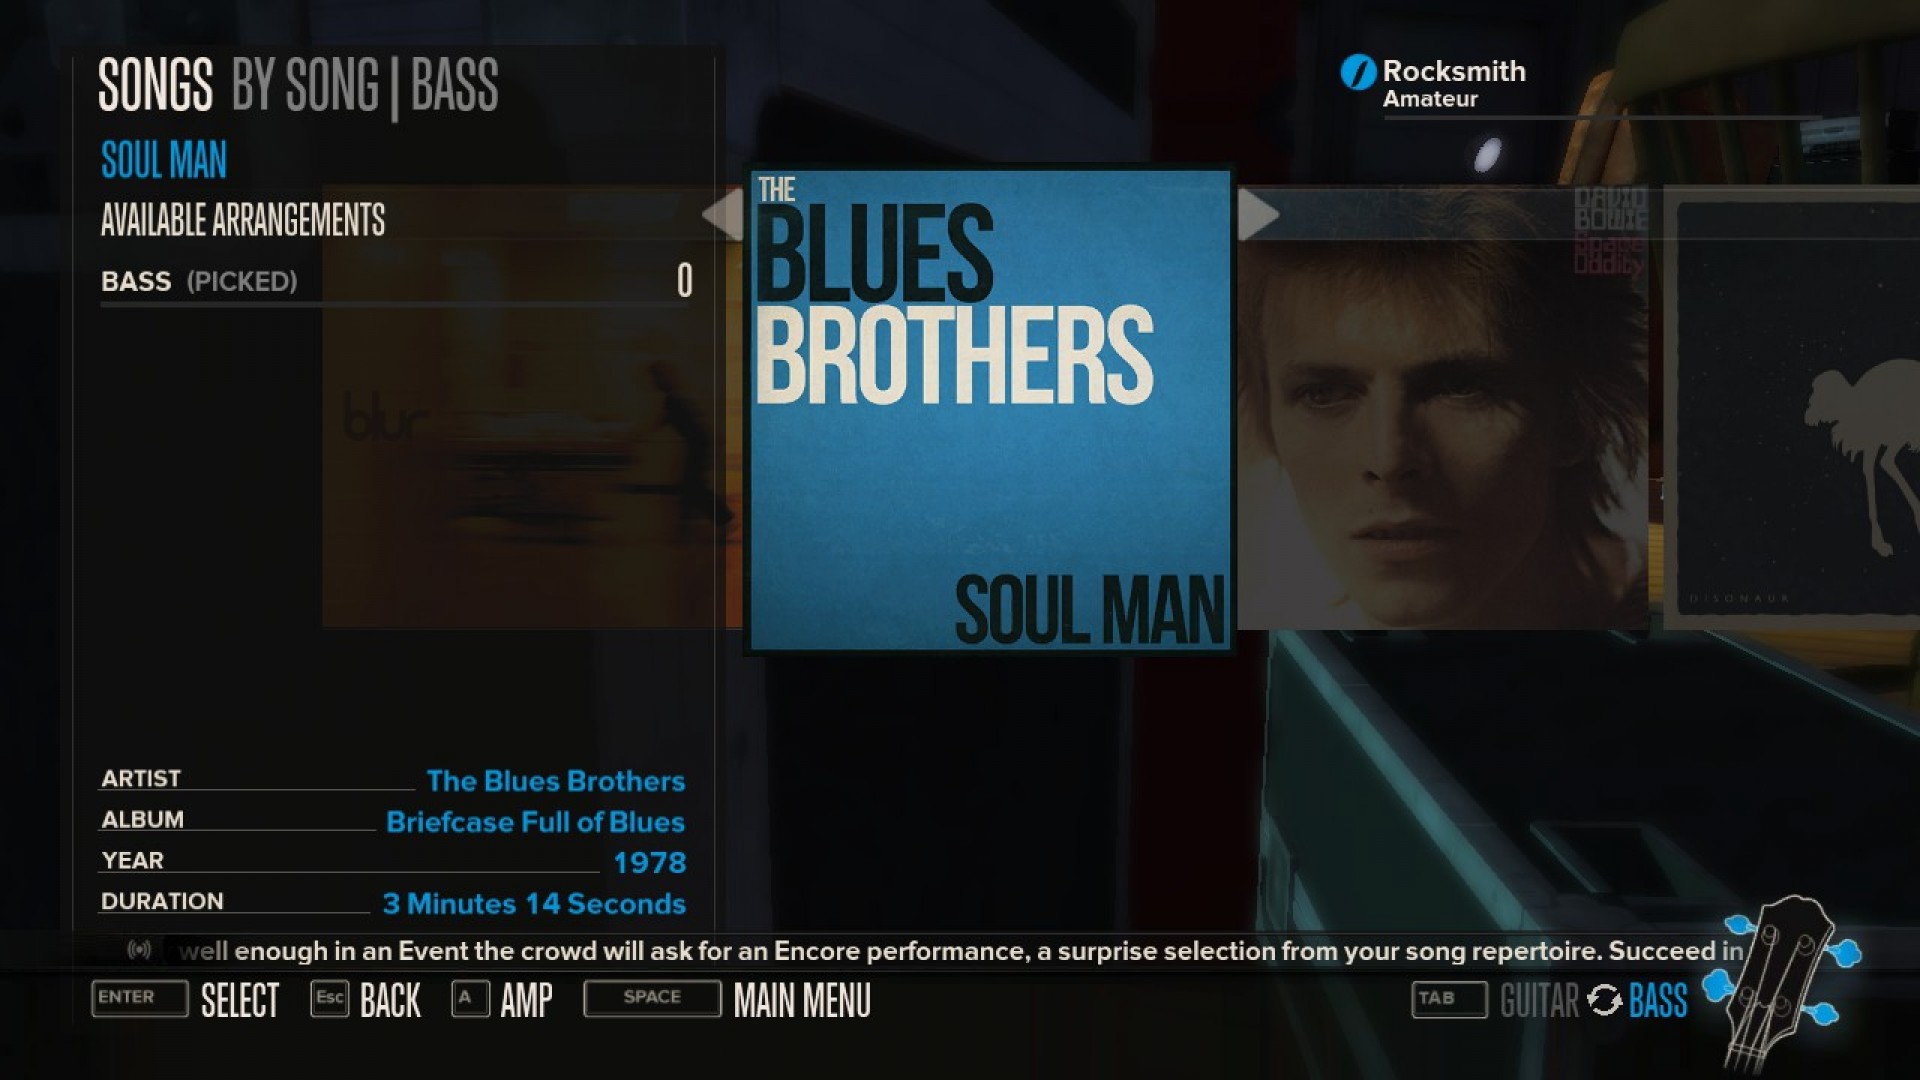 Rocksmith - The Blues Brothers Band - Soul Man screenshot